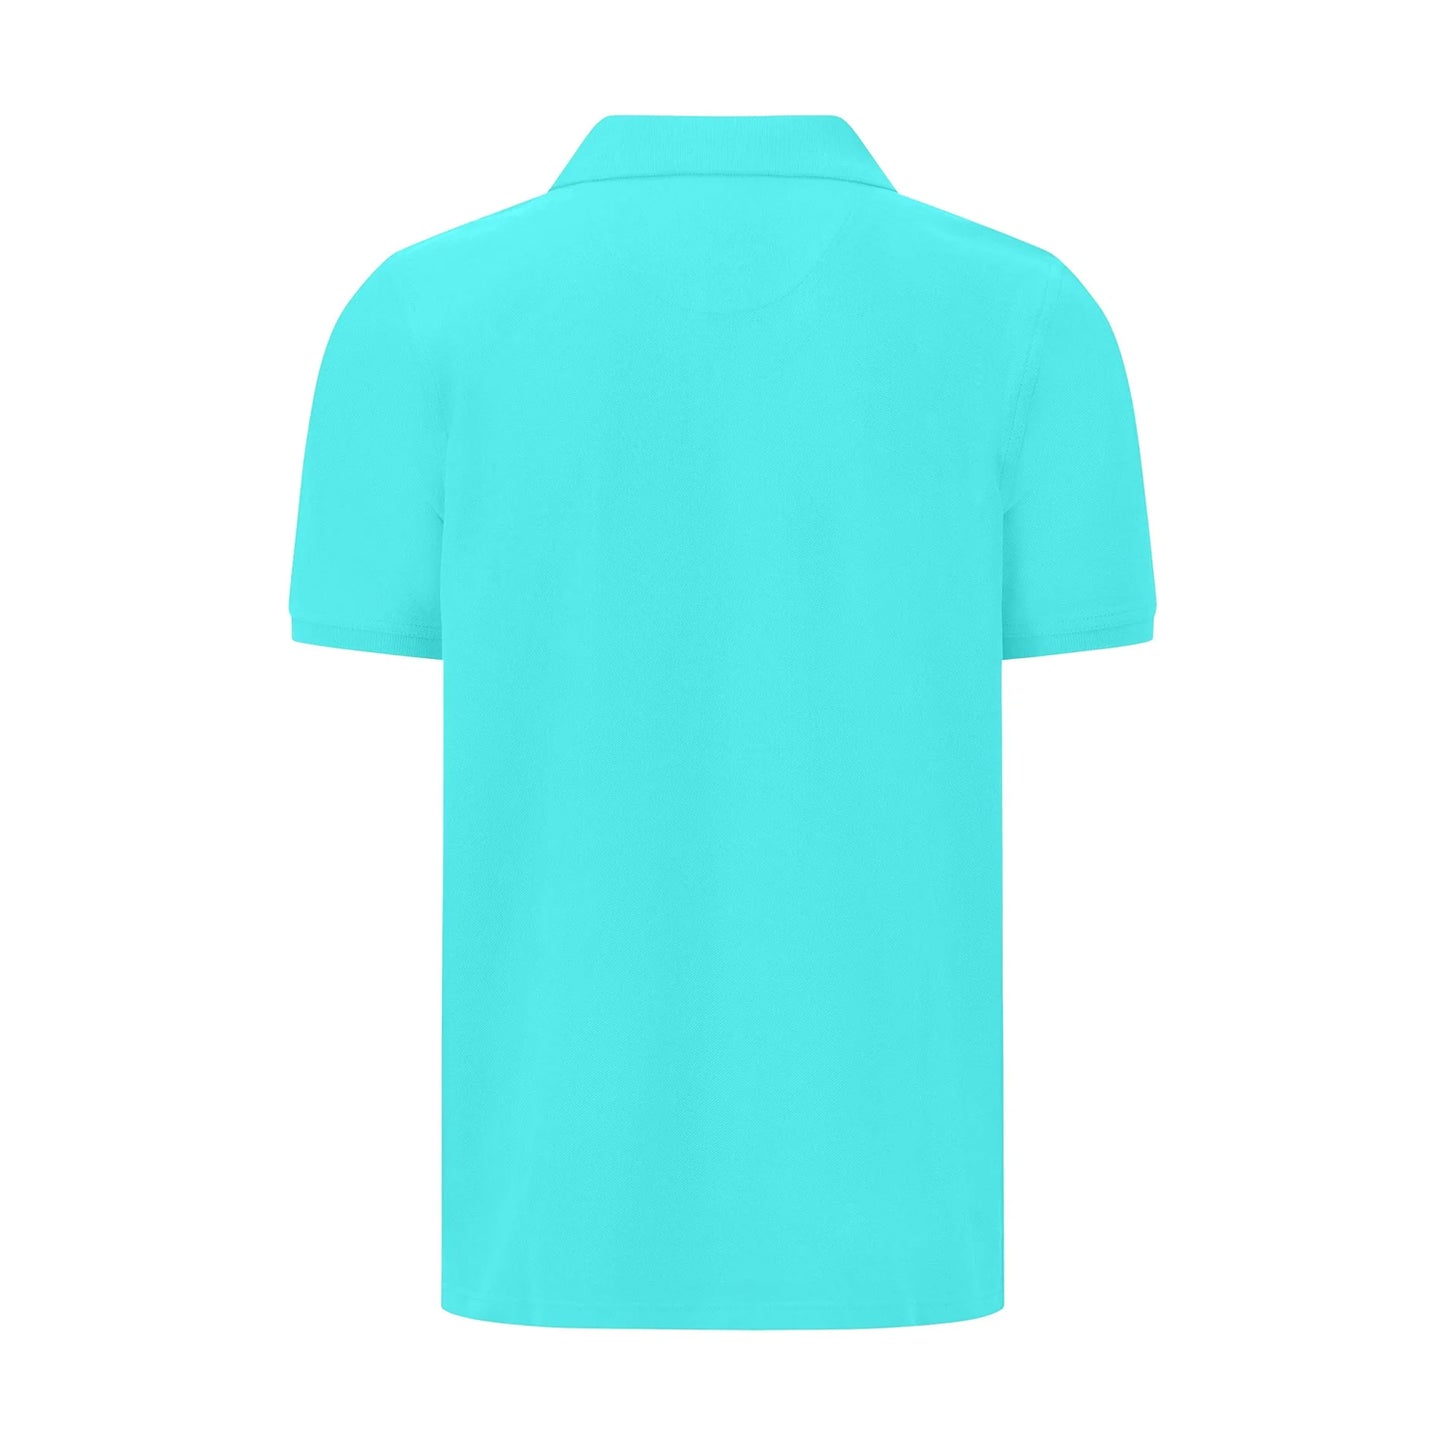 Fynch-Hatton Men's Polo Shirt - Supima Cotton - Aqua